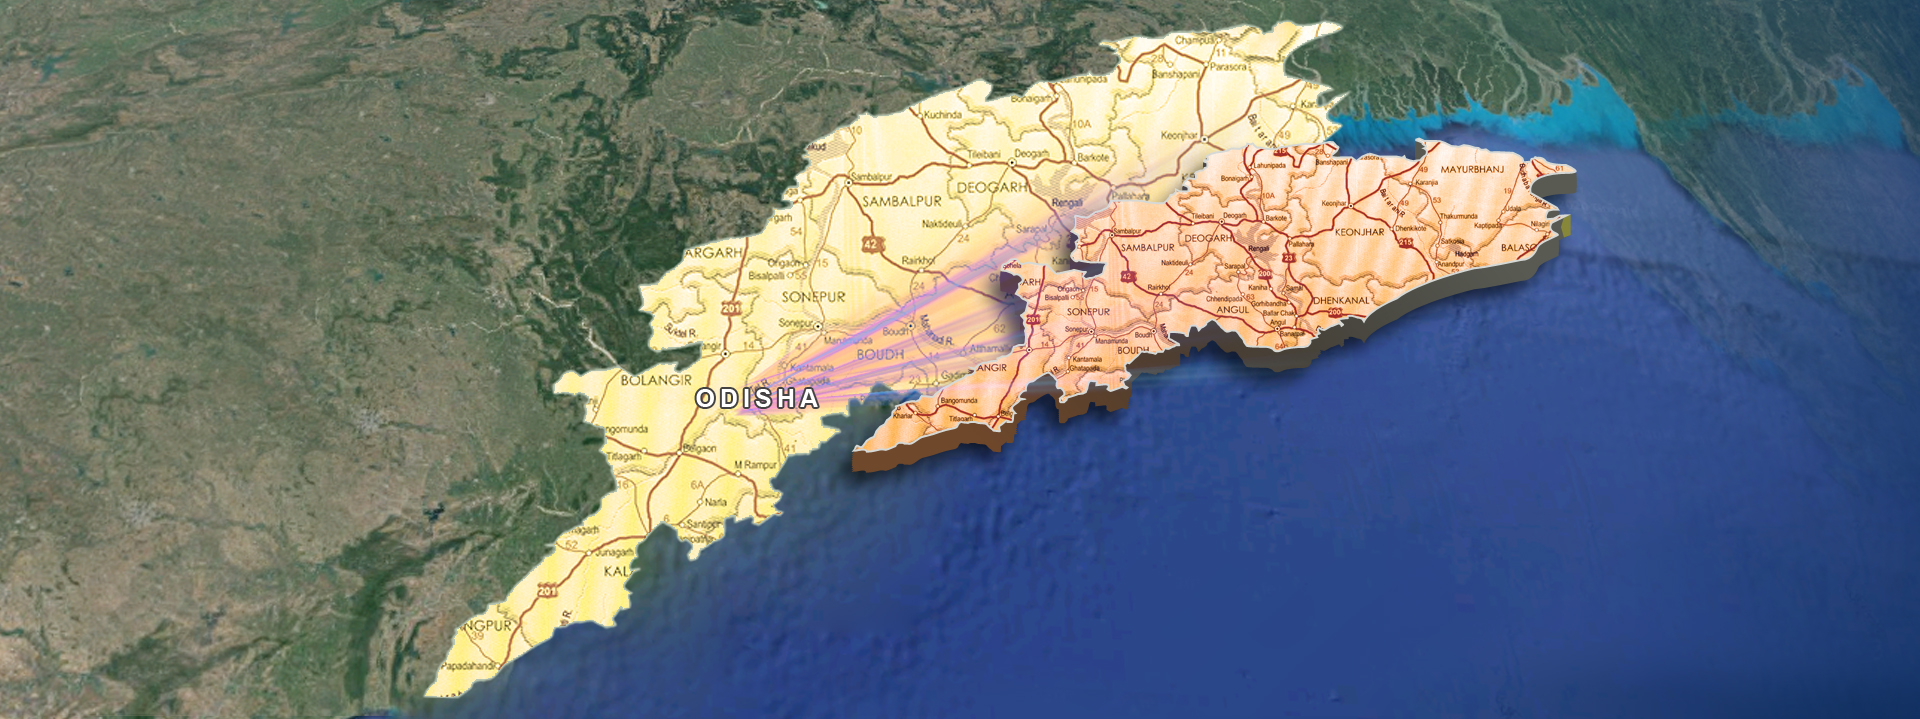 Odisha GIS Map